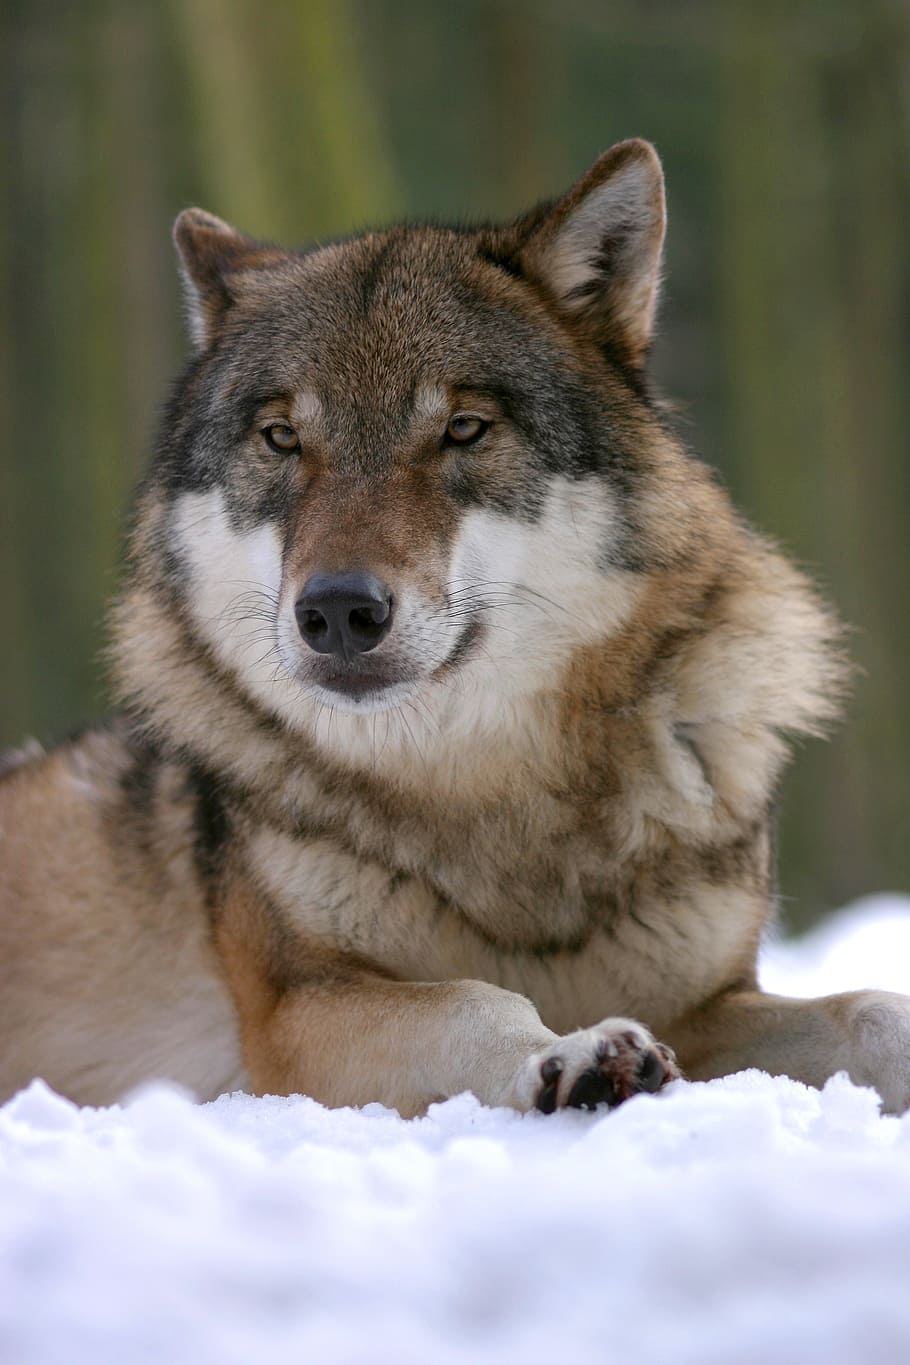 adulto lobo-marfim, postura, neve, lobo, jardim zoológico, canis lupus, canino, mamífero, lobos, fotografia da vida selvagem